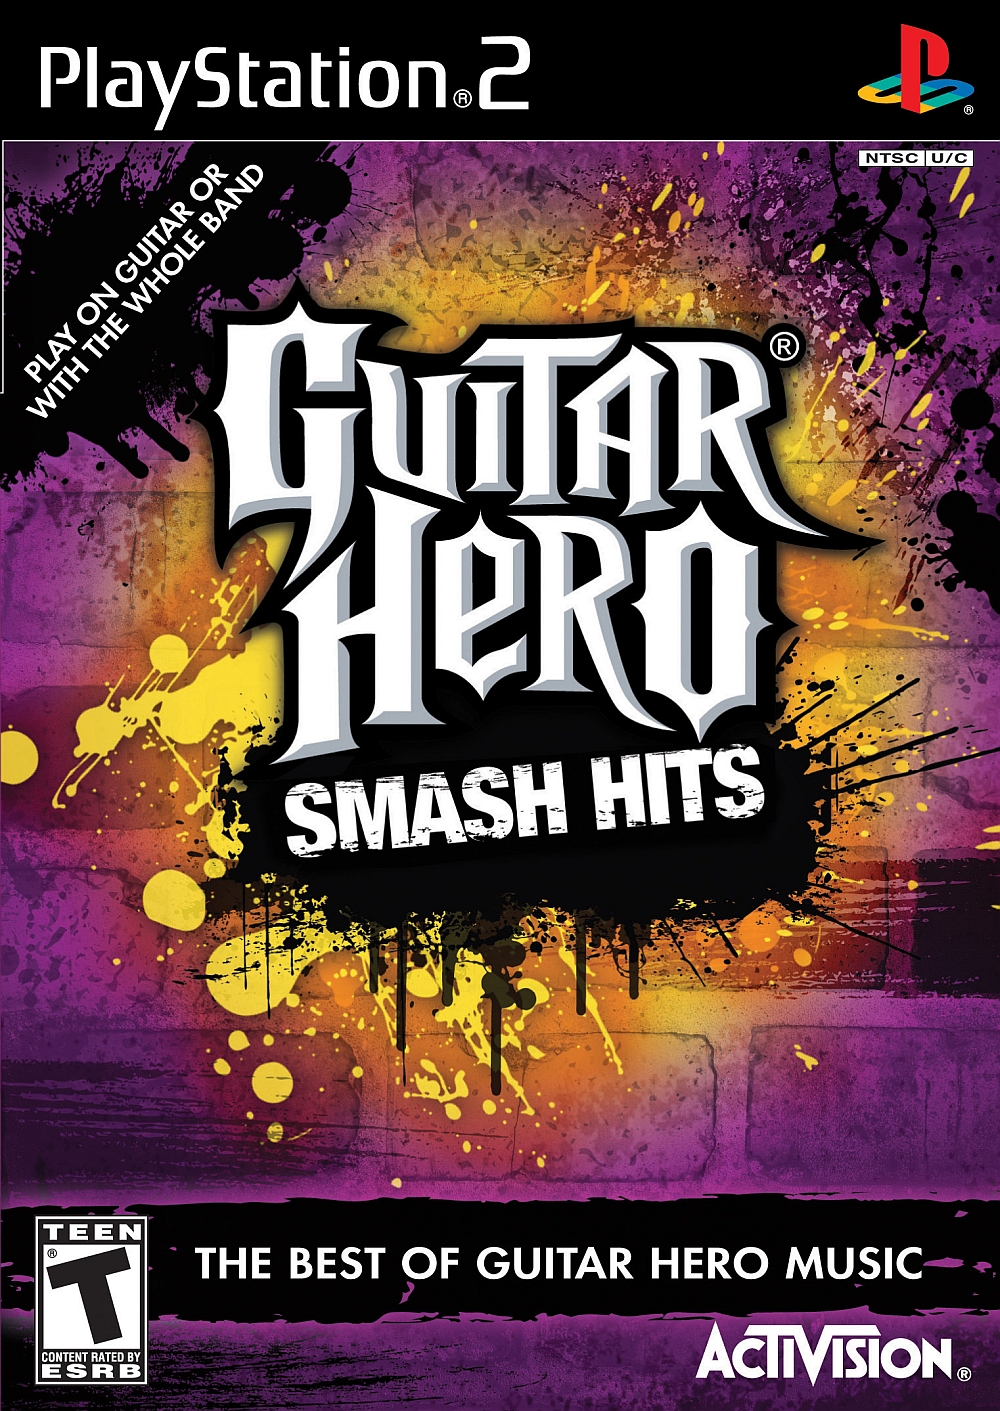 jaquette du jeu vidéo Guitar Hero: Greatest Hits